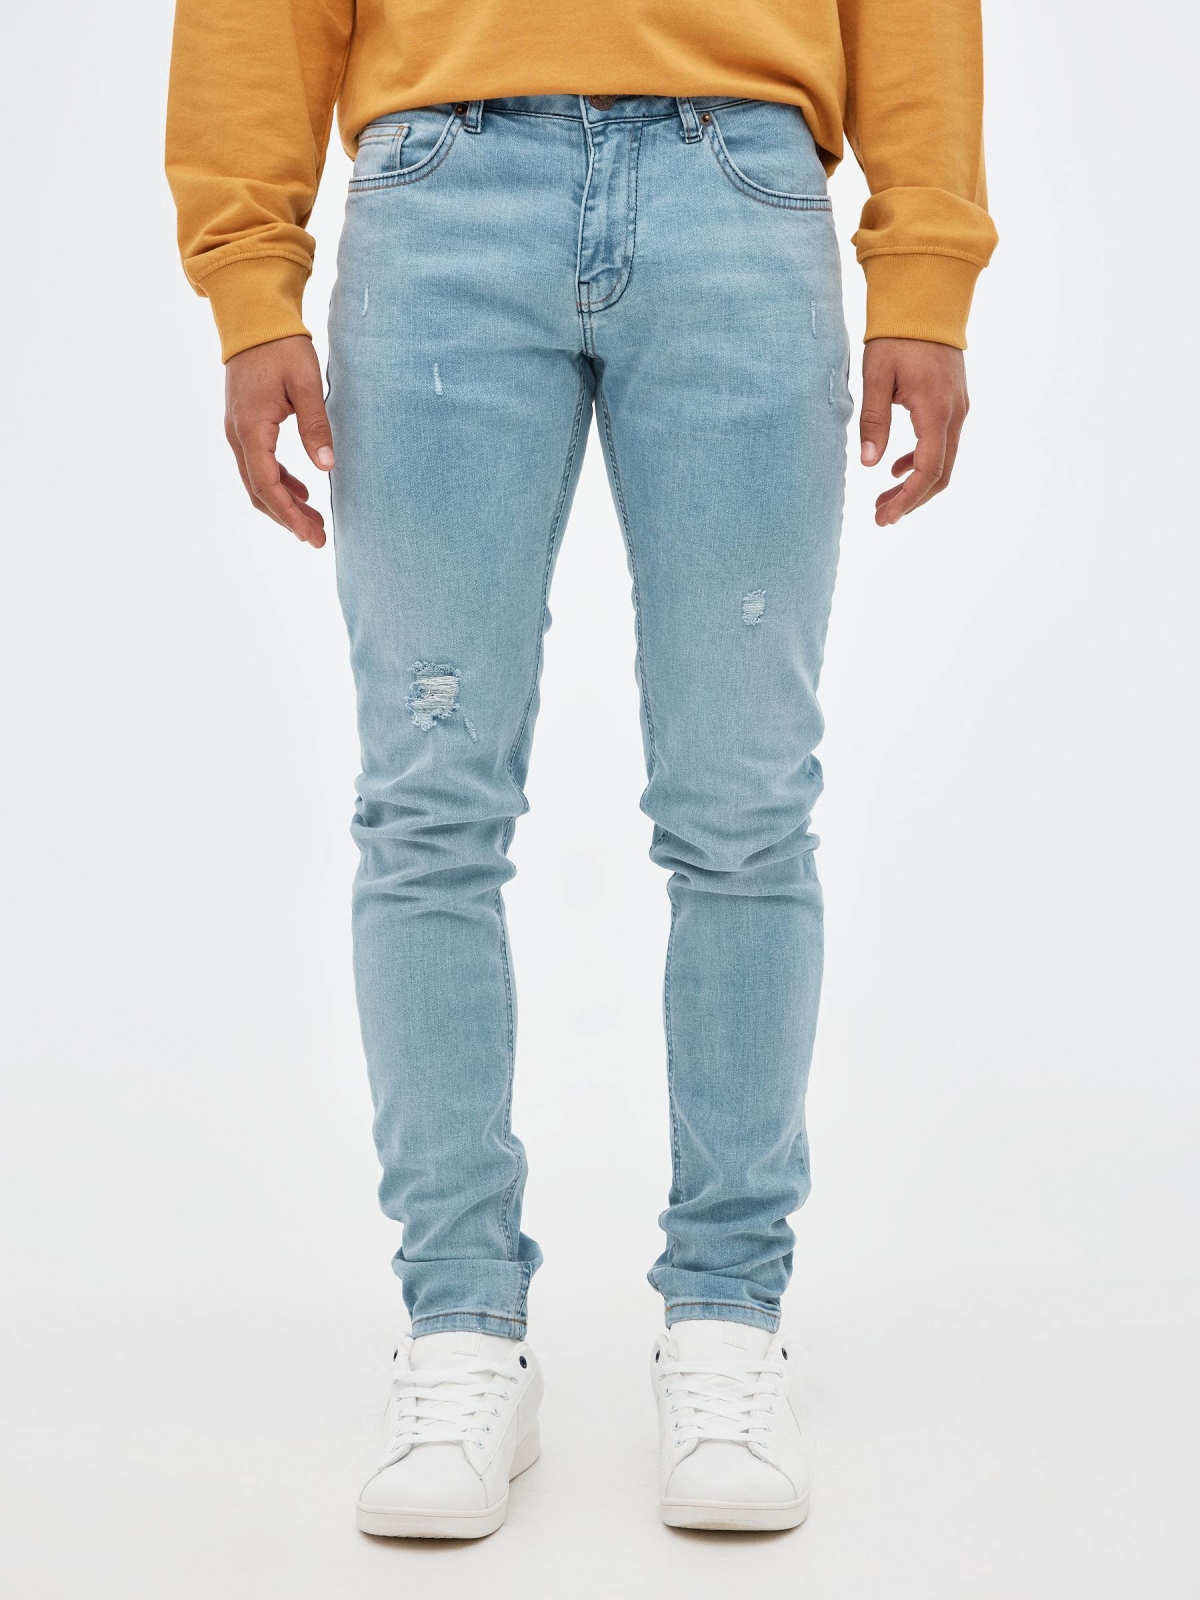 Jeans Super Slim azul claro mostaza vista media frontal